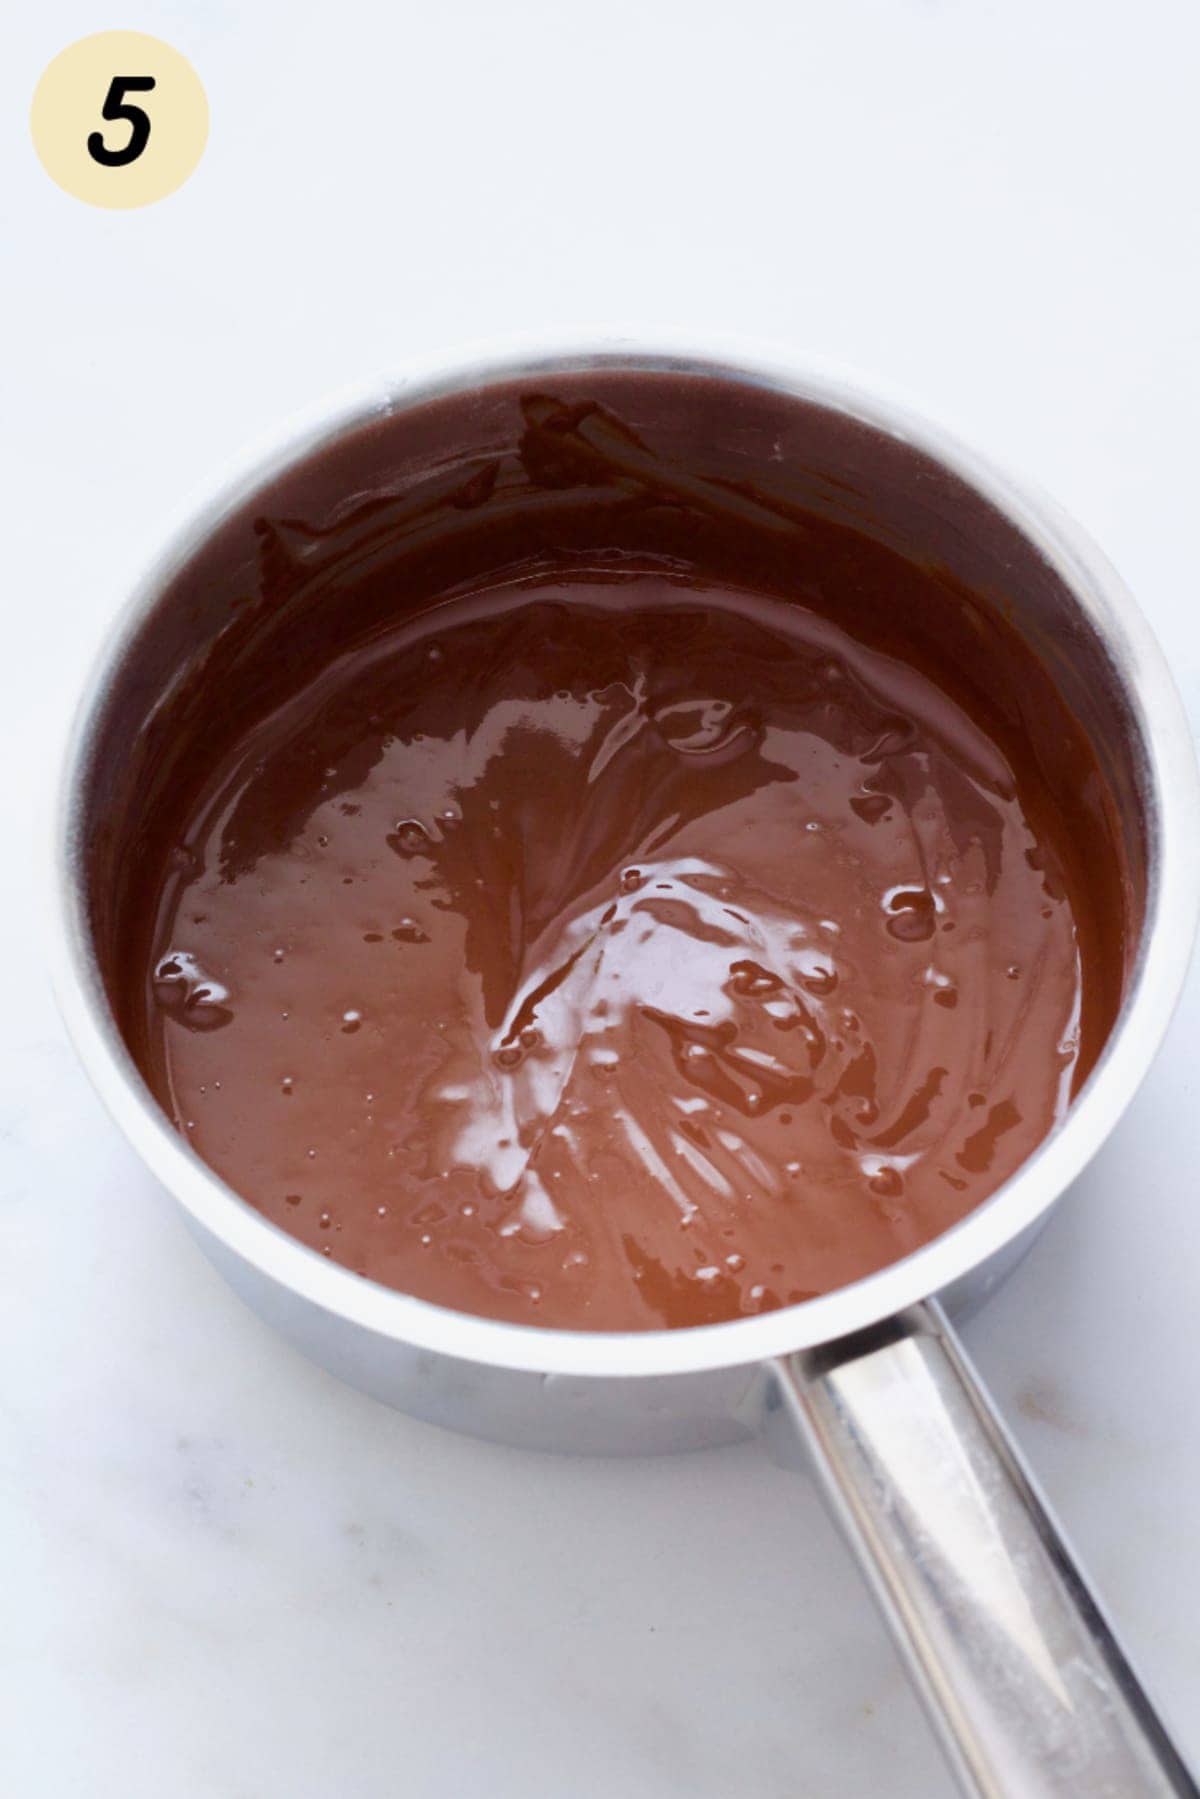 Chocolate ganache in a pan.